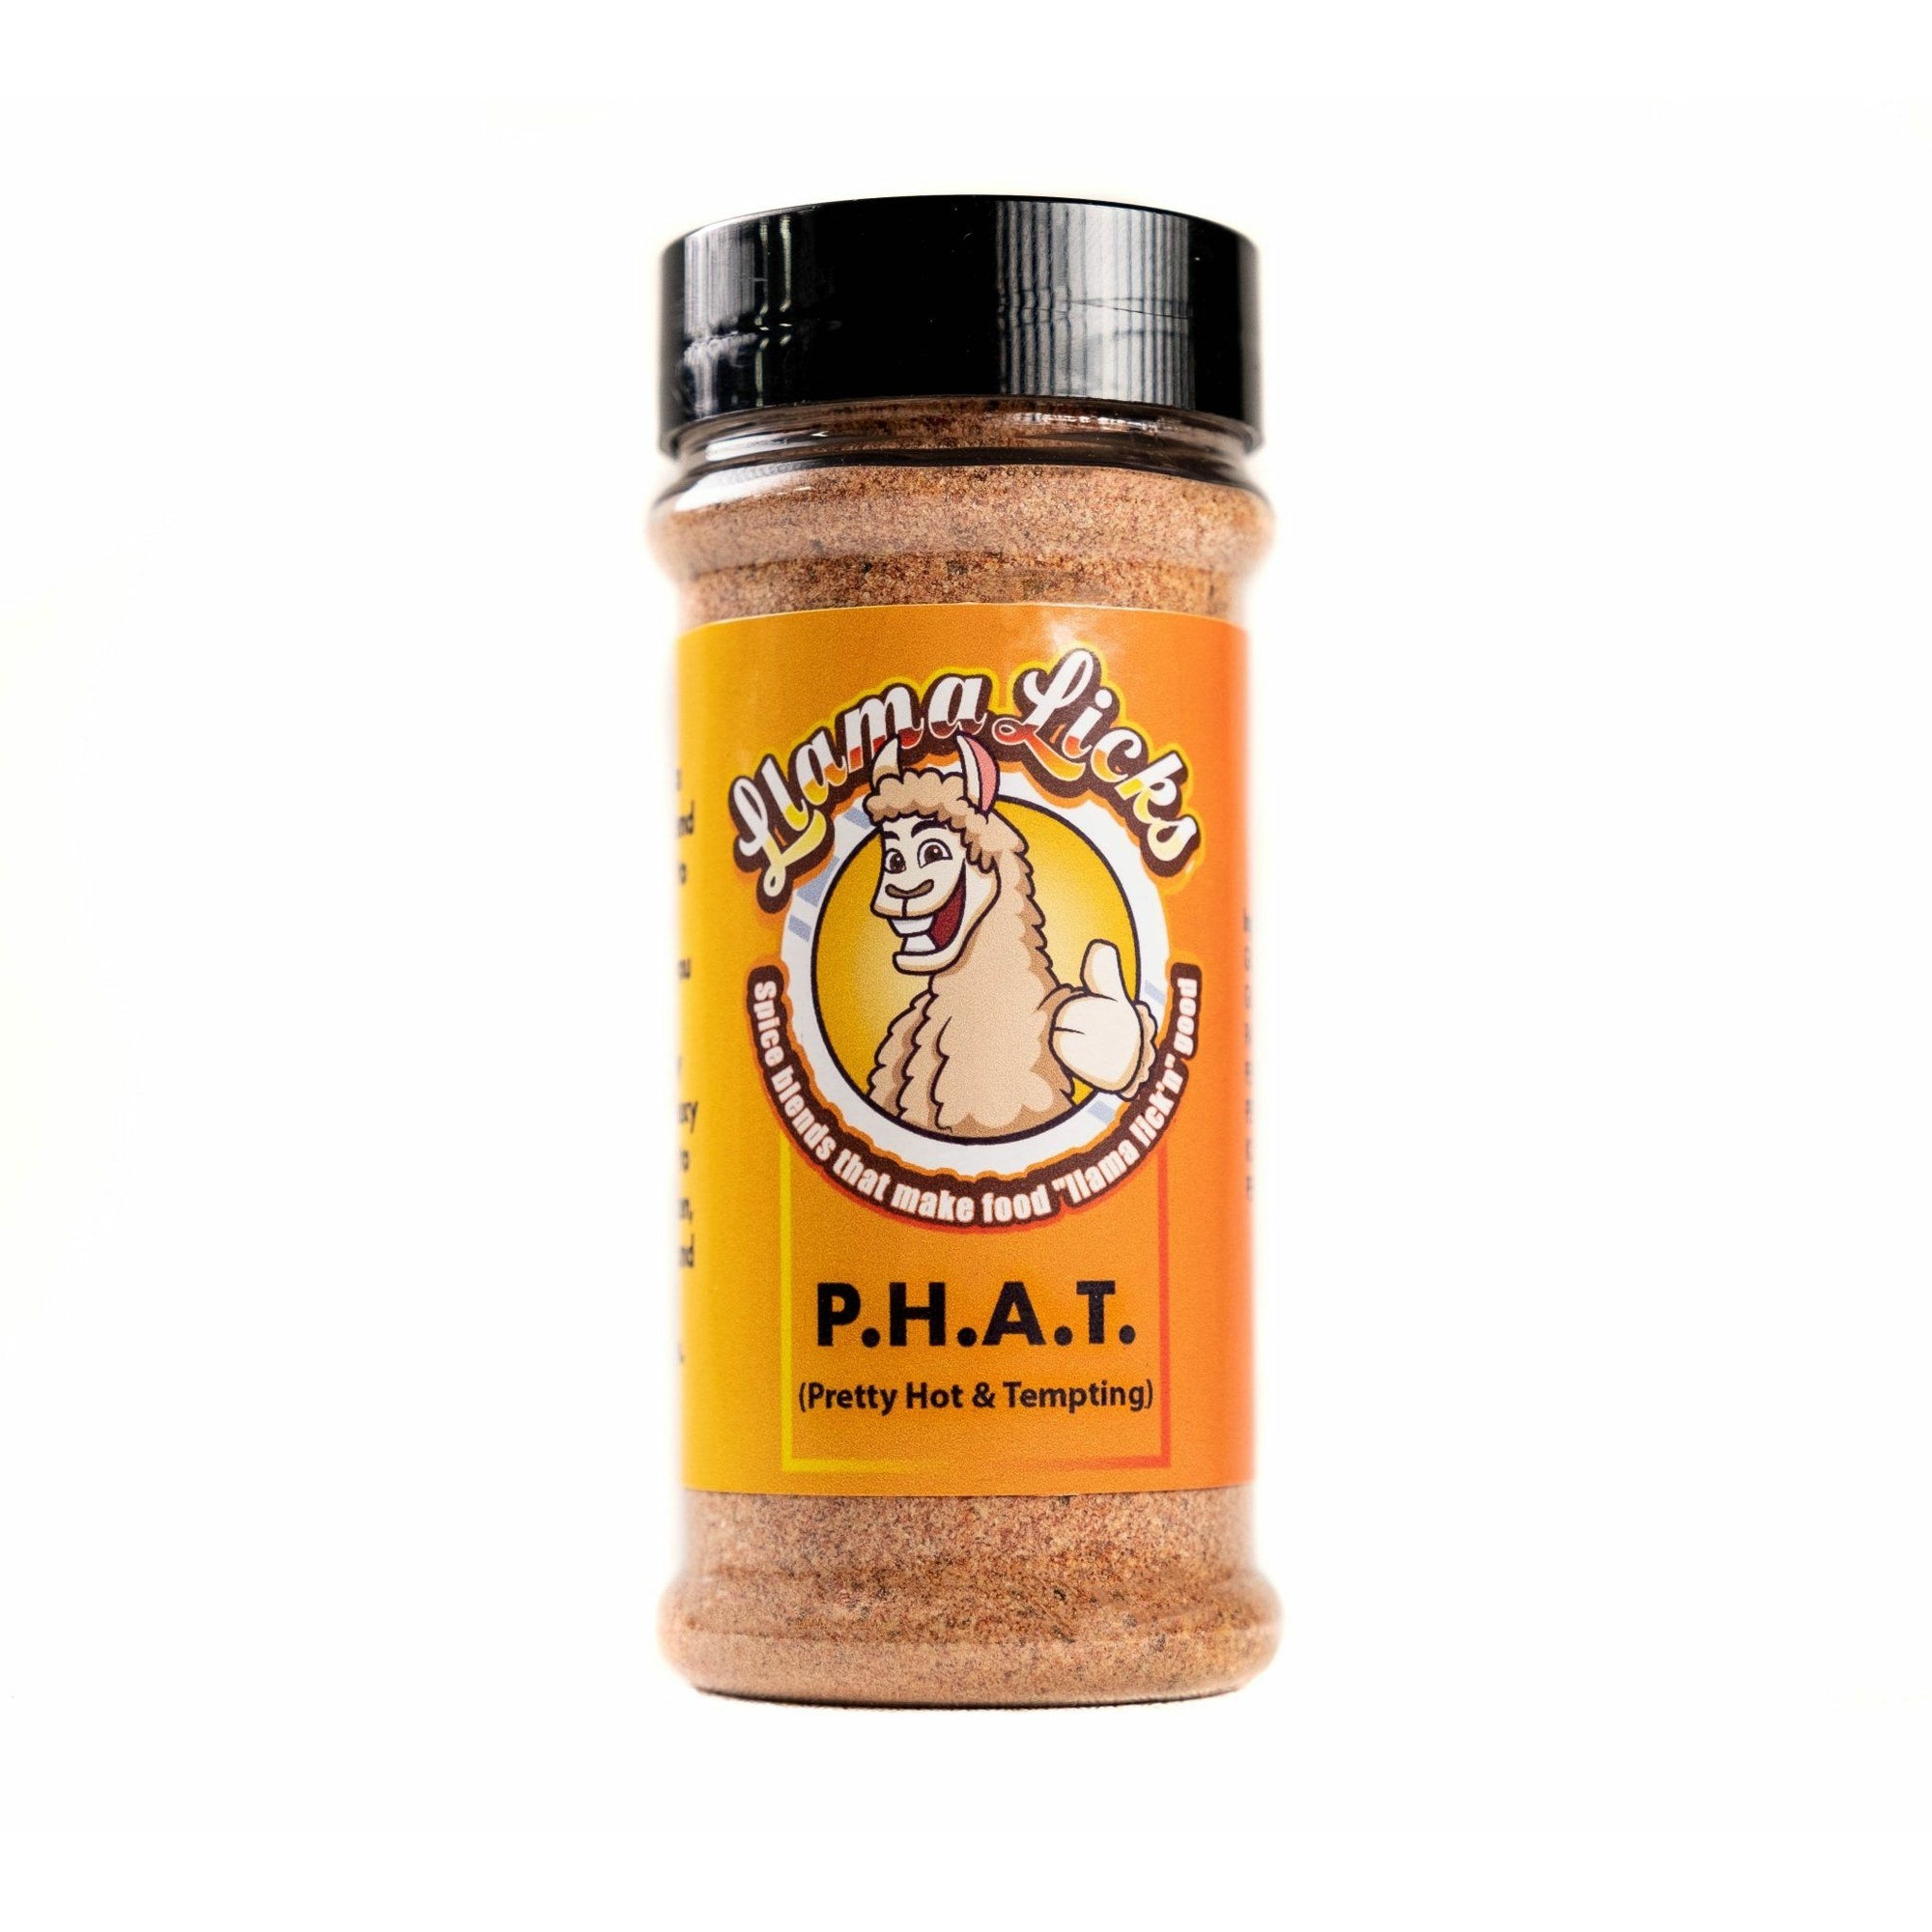 P.H.A.T. (Pretty Hot & Tempting) Seasoning Firebee Honey 